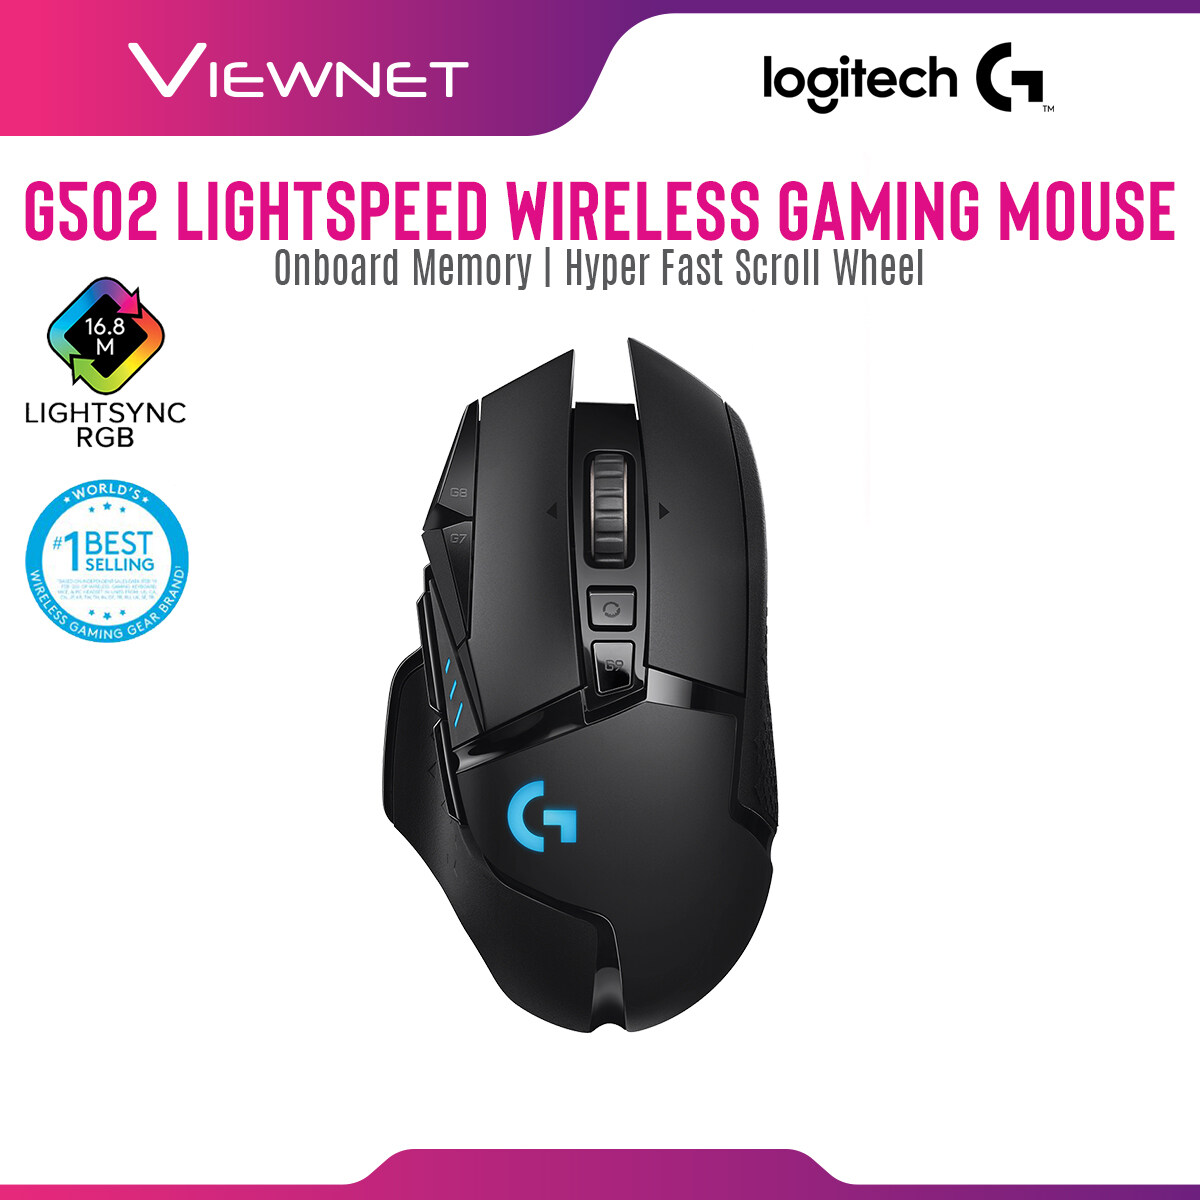 Logitech Wireless Gaming Mouse G502 Lightspeed with Hero 16k Sensor, Lightsync RGB, Hyper-Fast Scroll Wheel, Onboard Memory, Lightspeed Wireless Receiver (910-005569)